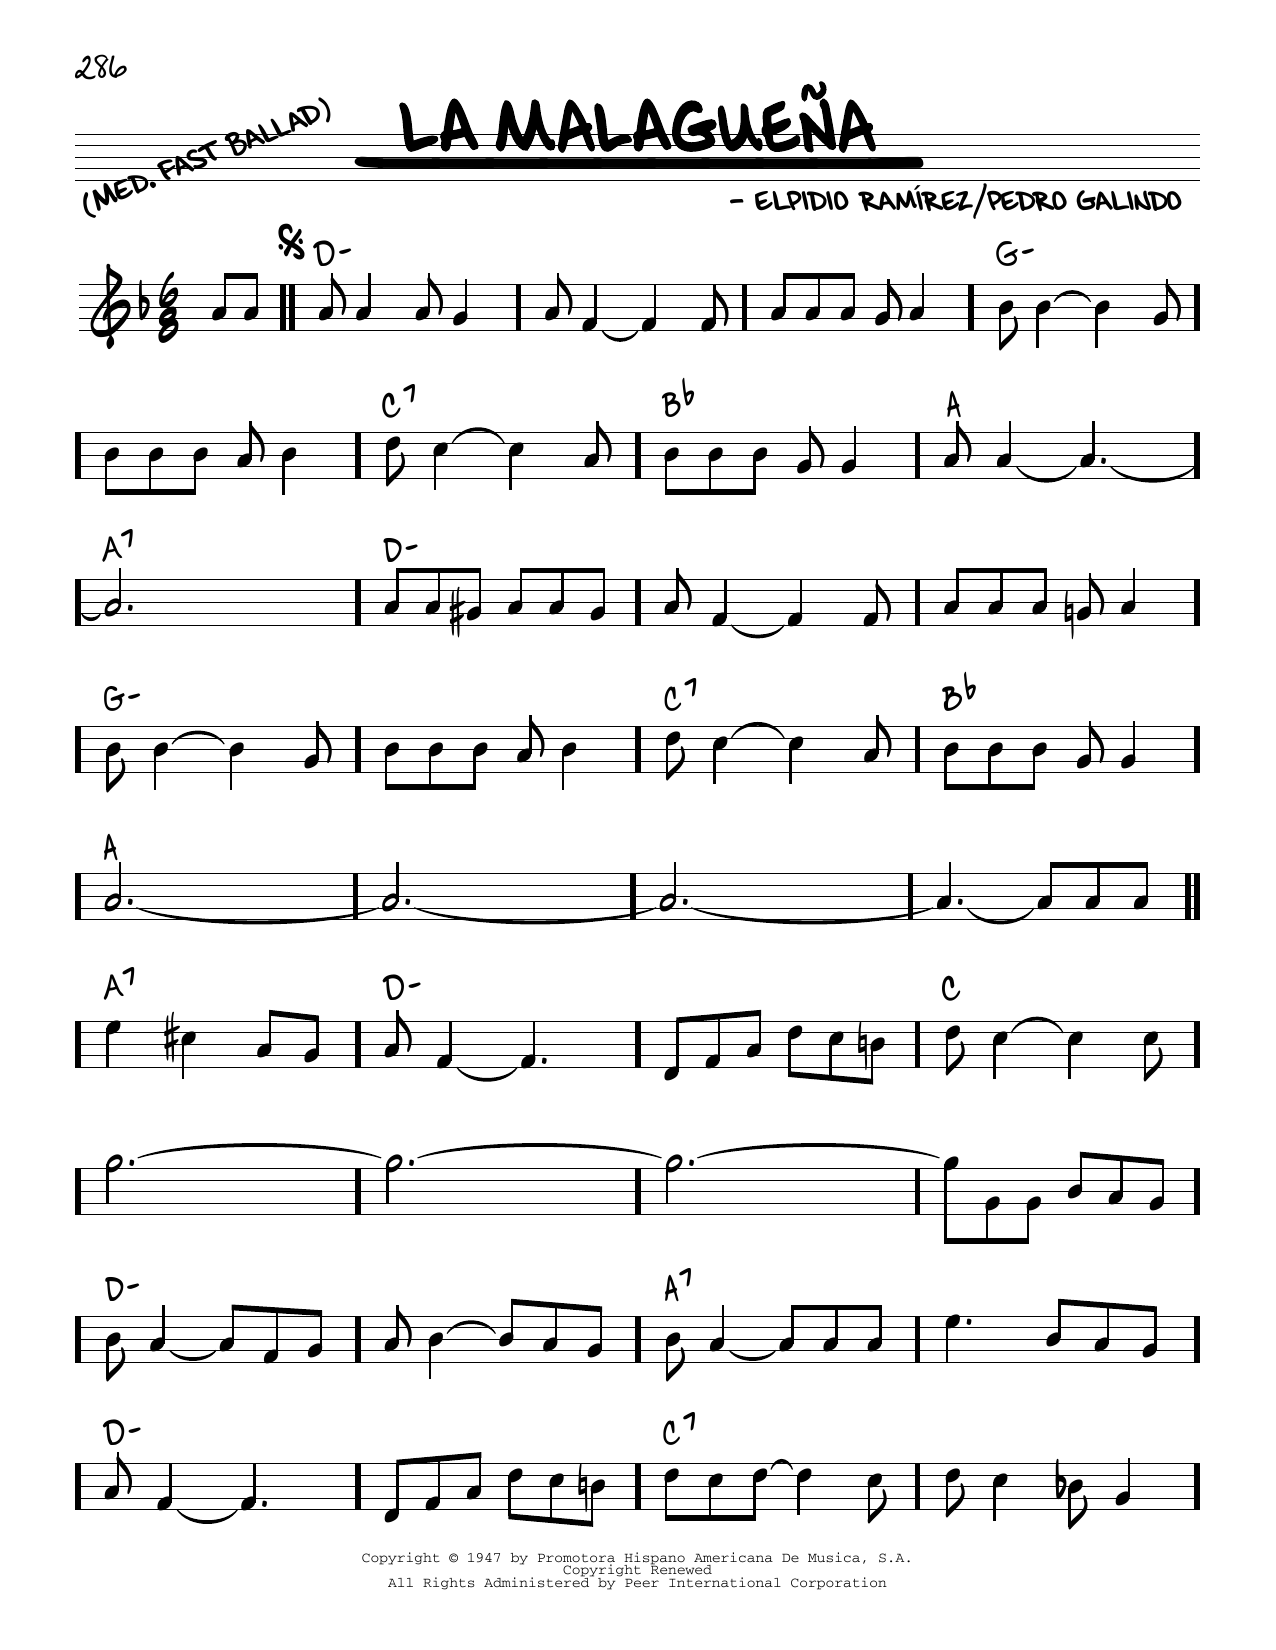 Elpidio Ramirez La Malaguena Sheet Music Notes & Chords for Real Book – Melody & Chords - Download or Print PDF